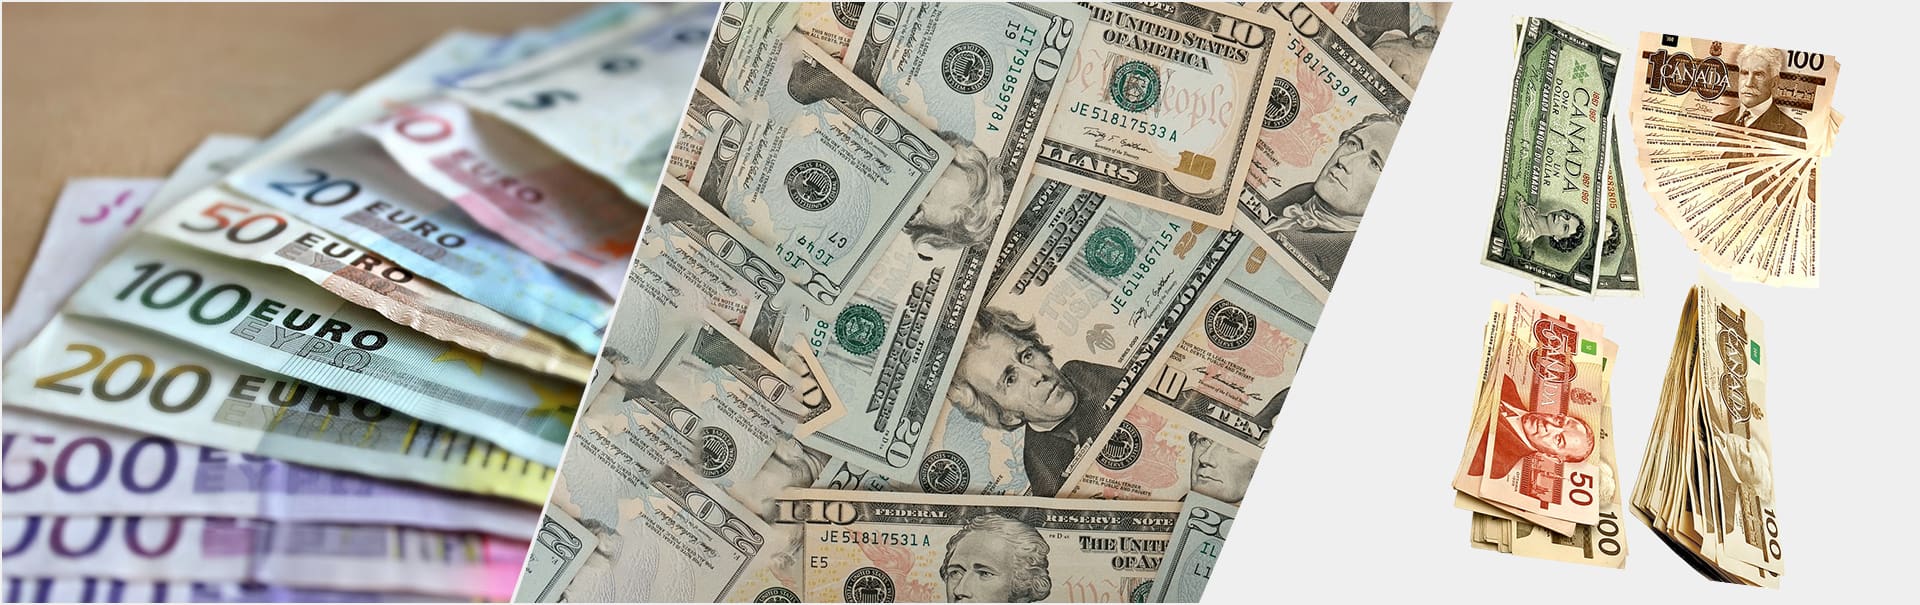 A close up of many dollar bills